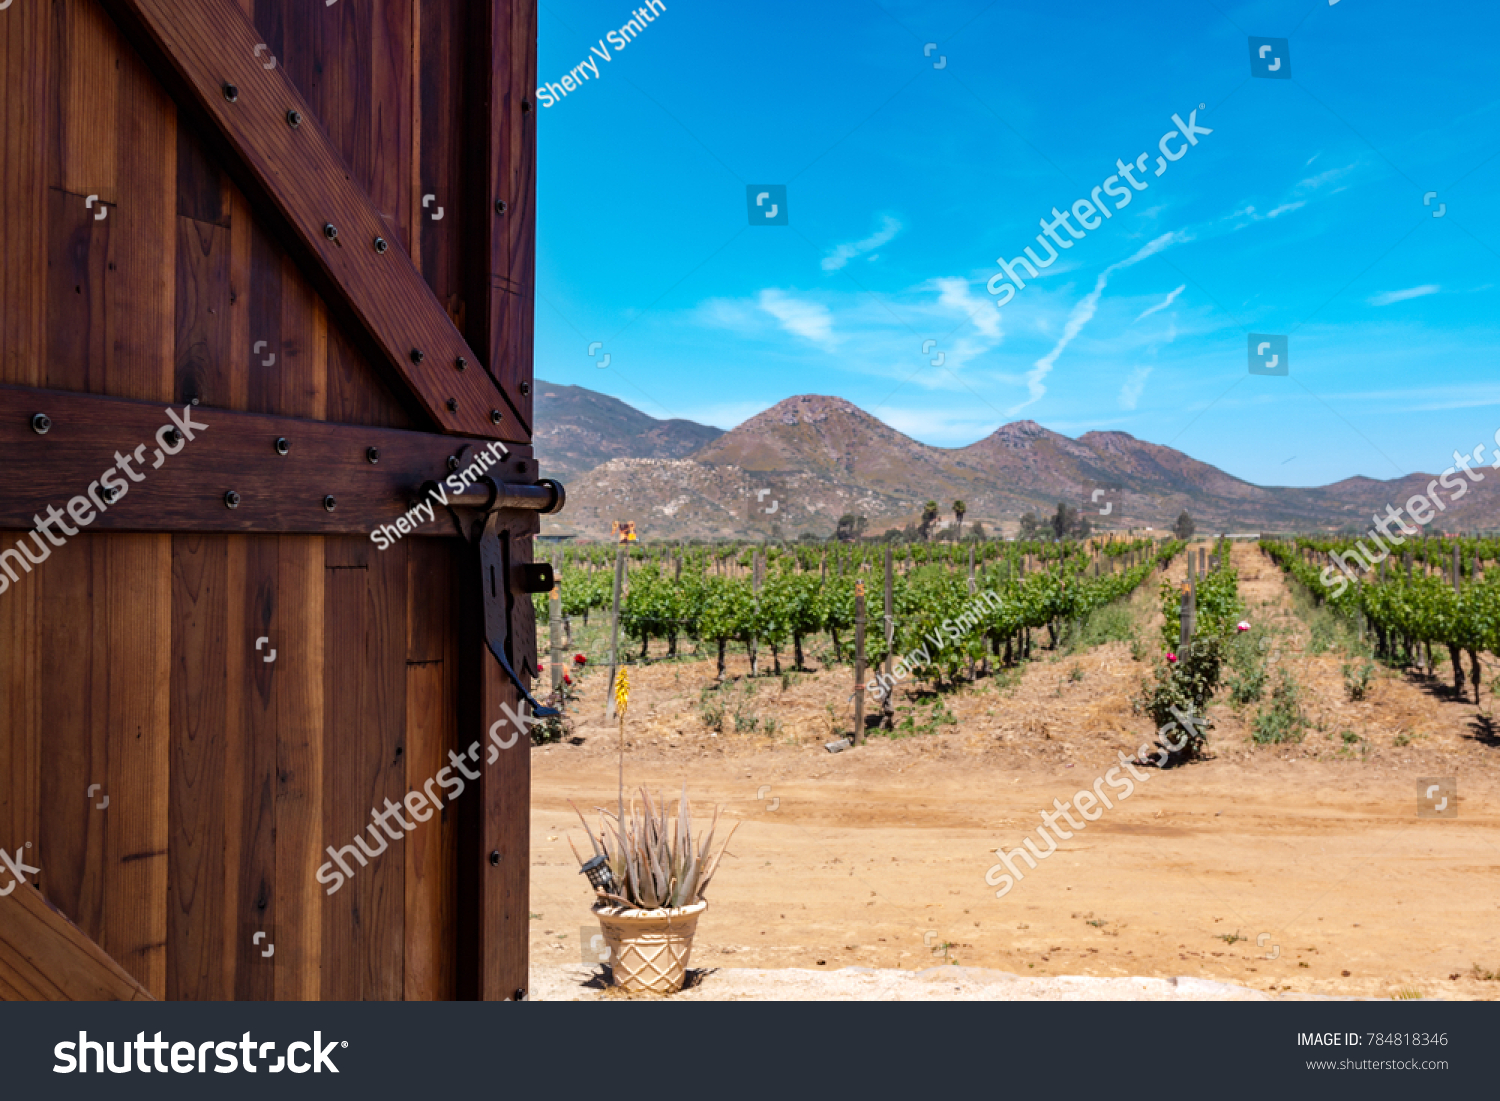 Door opening to a vineyard in Ensenada, Baja California, Mexico. #784818346